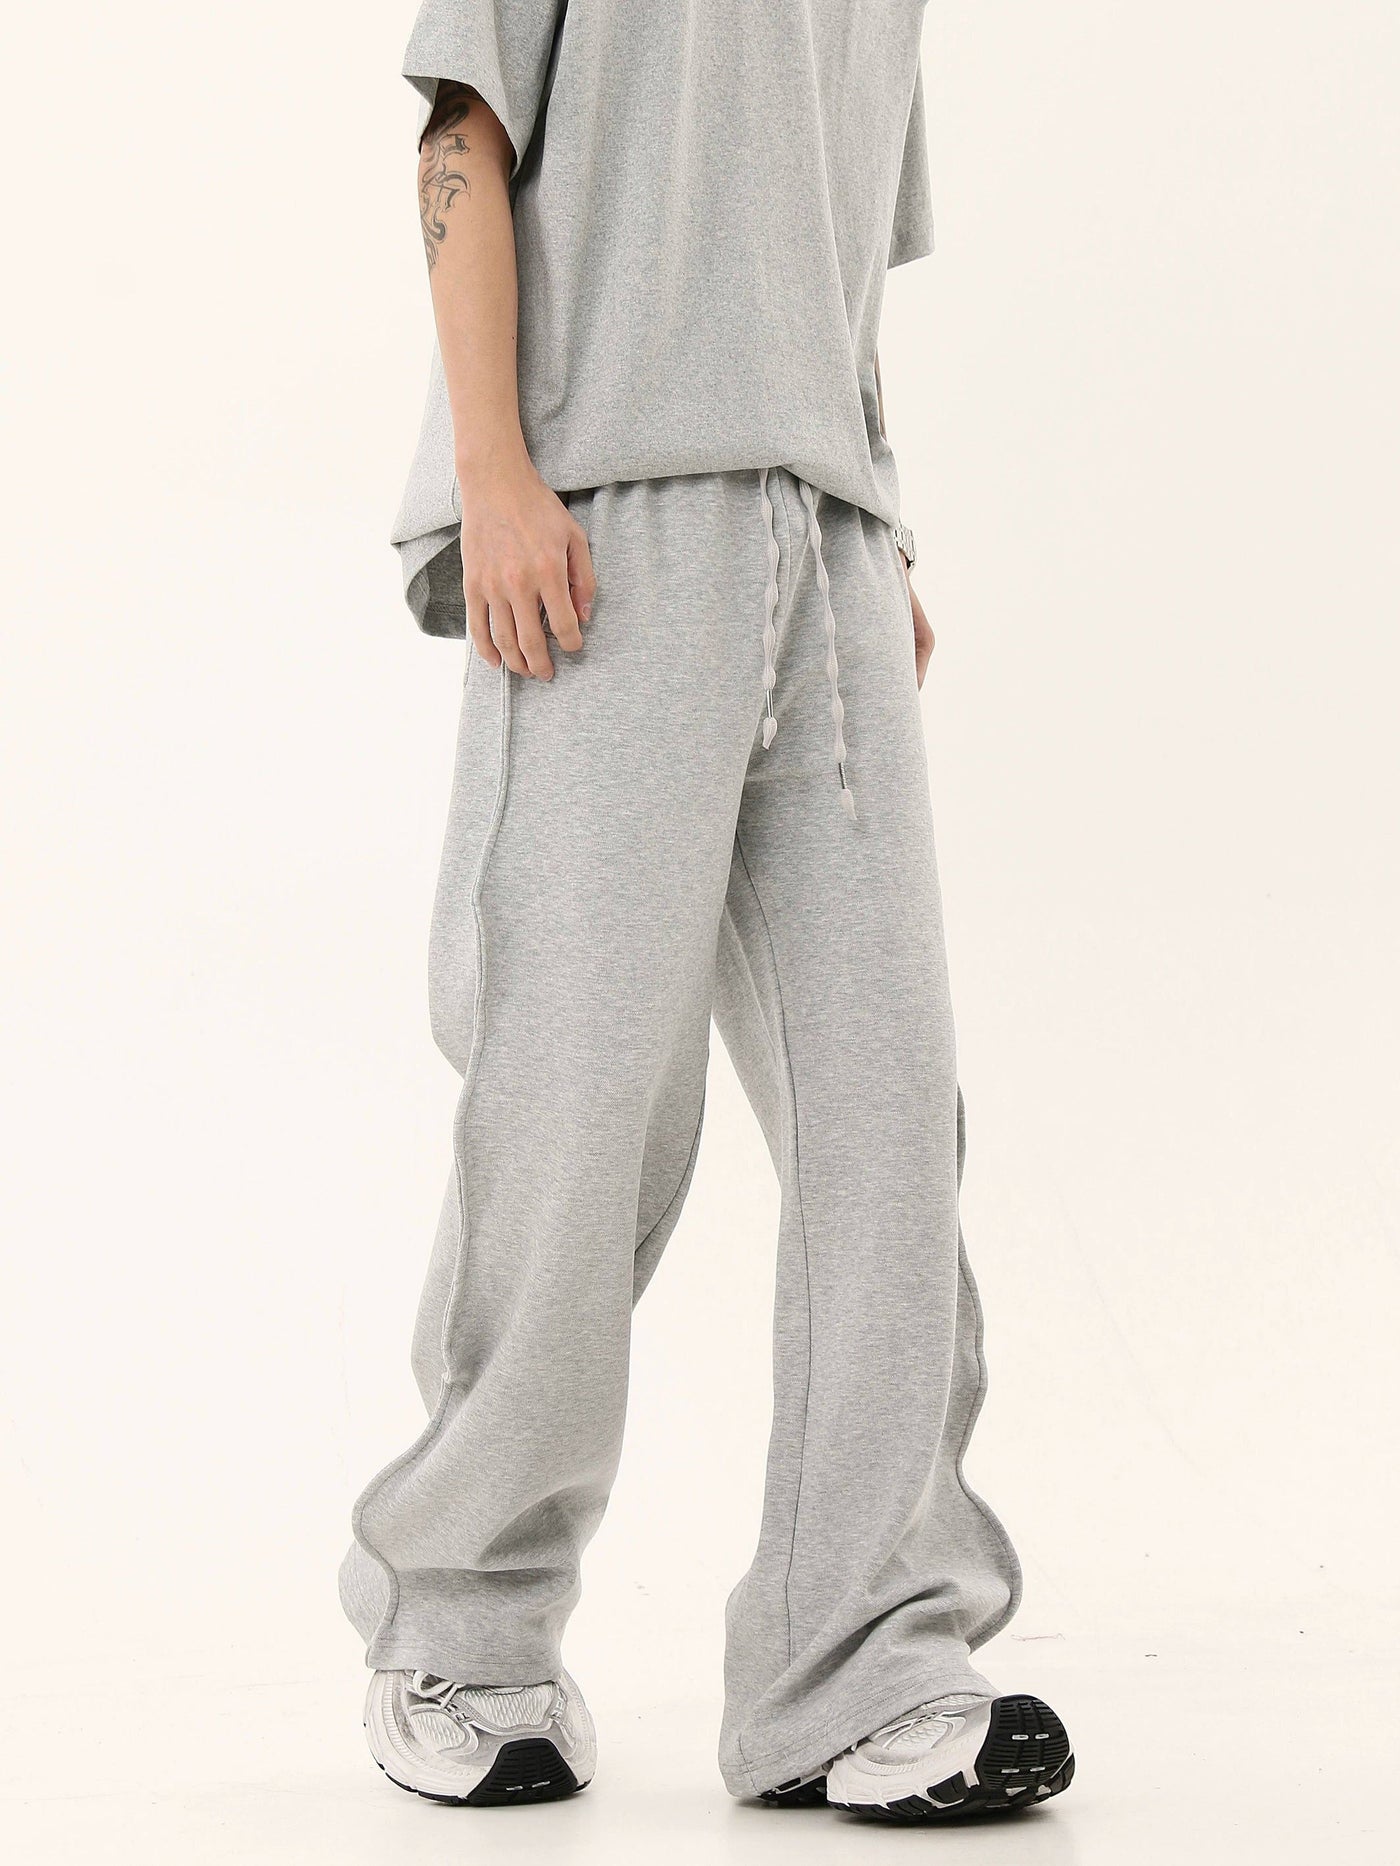 Side Wavy Shaped Sweatpants Korean Street Fashion Pants By Blacklists Shop Online at OH Vault